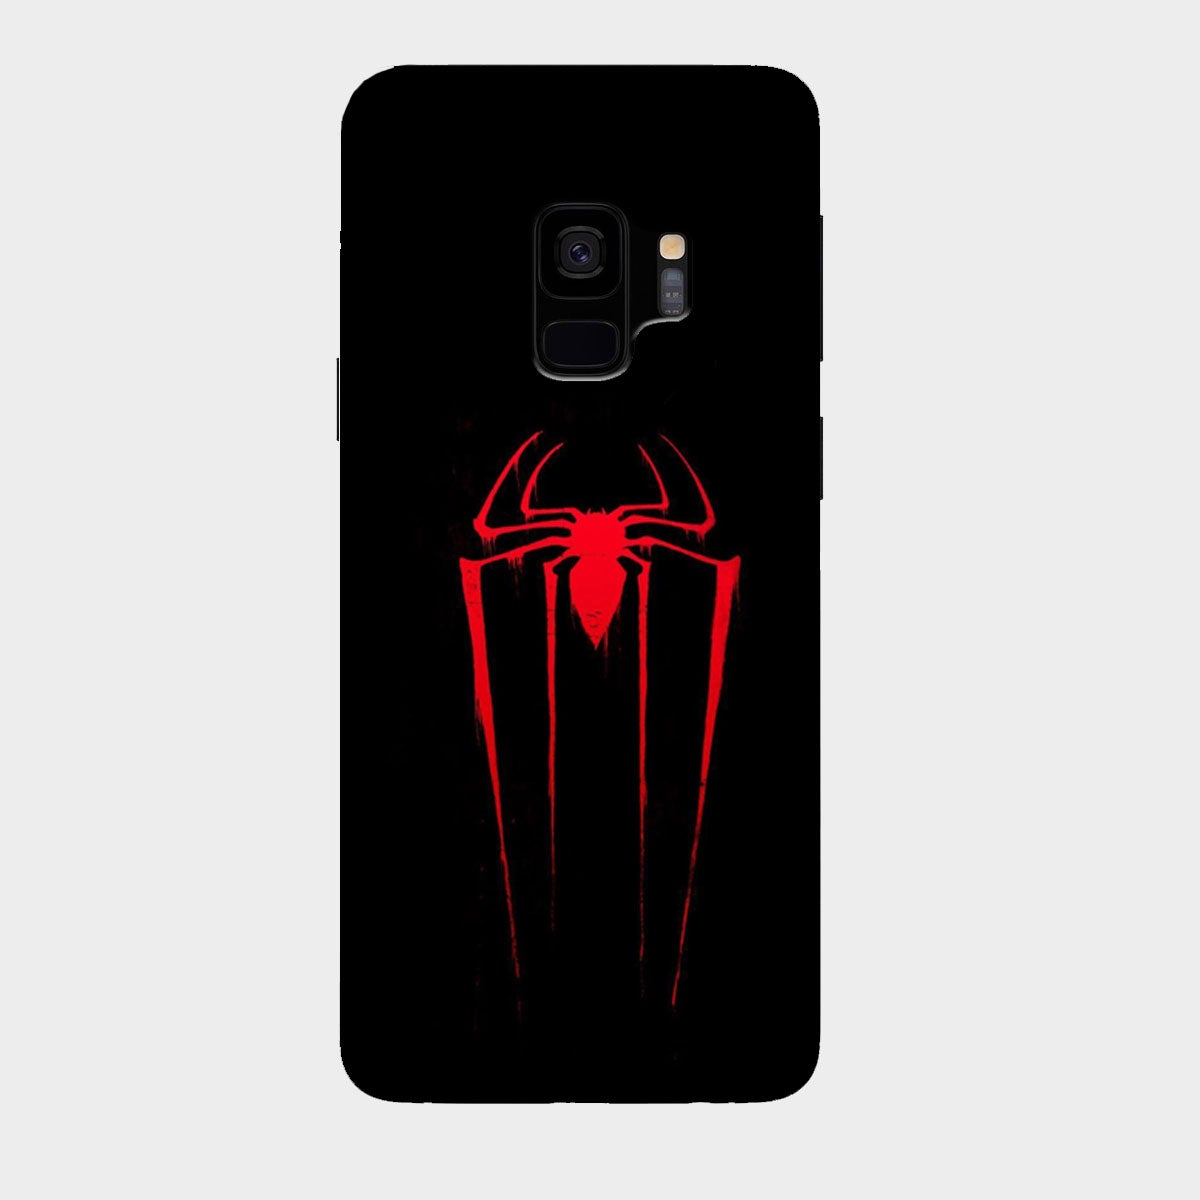 Spider Man - Black - Mobile Phone Cover - Hard Case - Samsung - Samsung